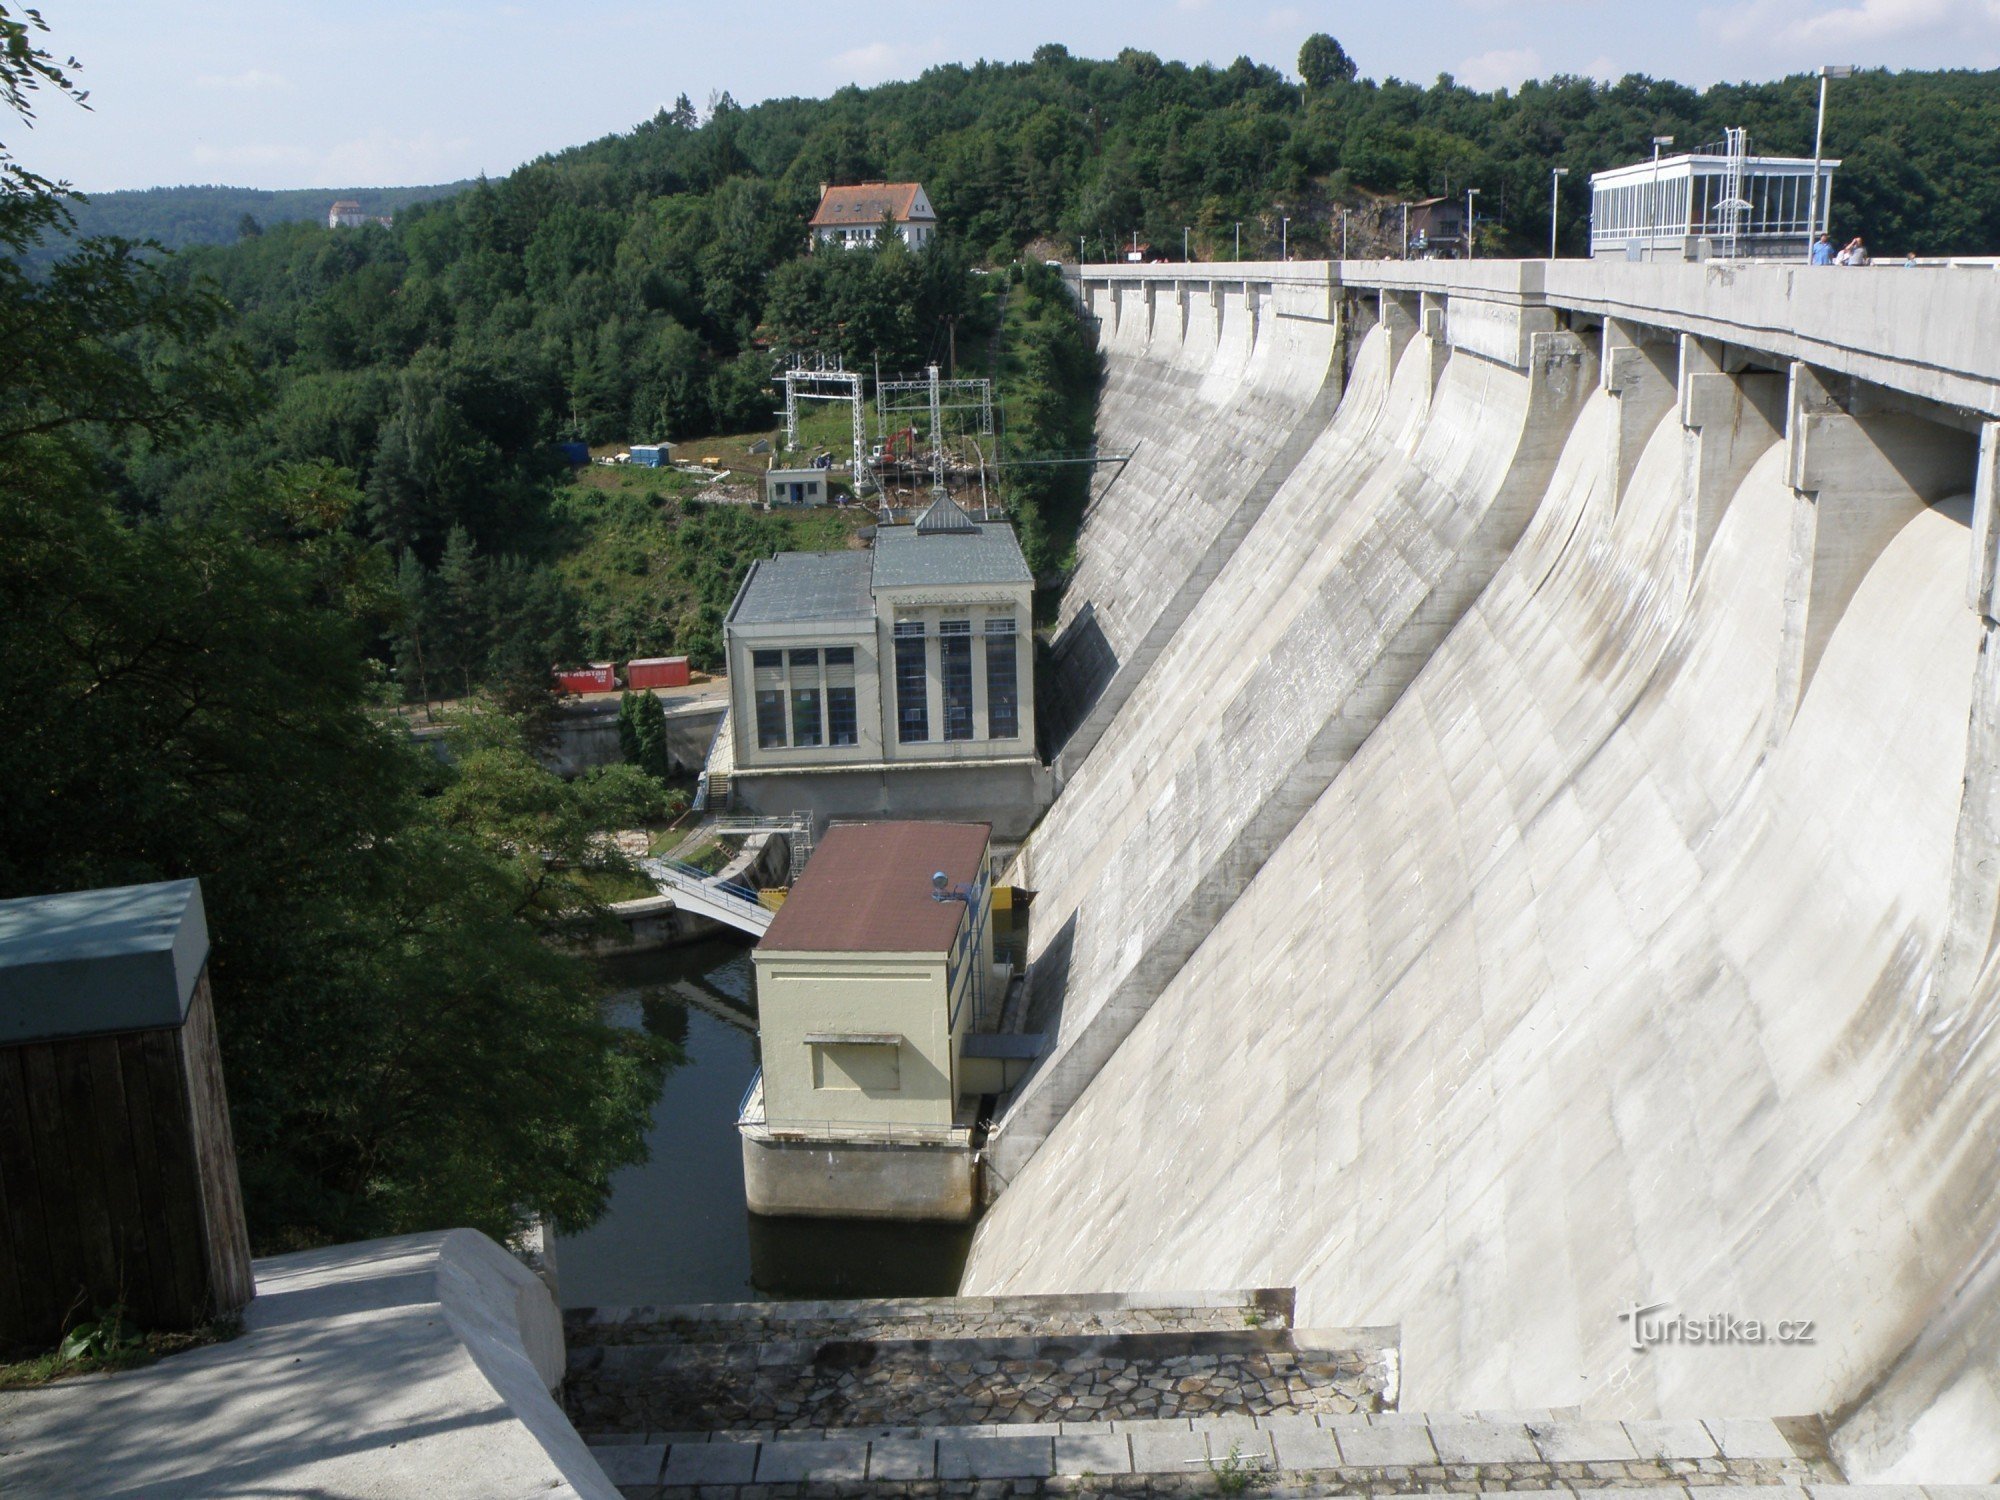 the crown of the dam of the Vranovské Reservoir